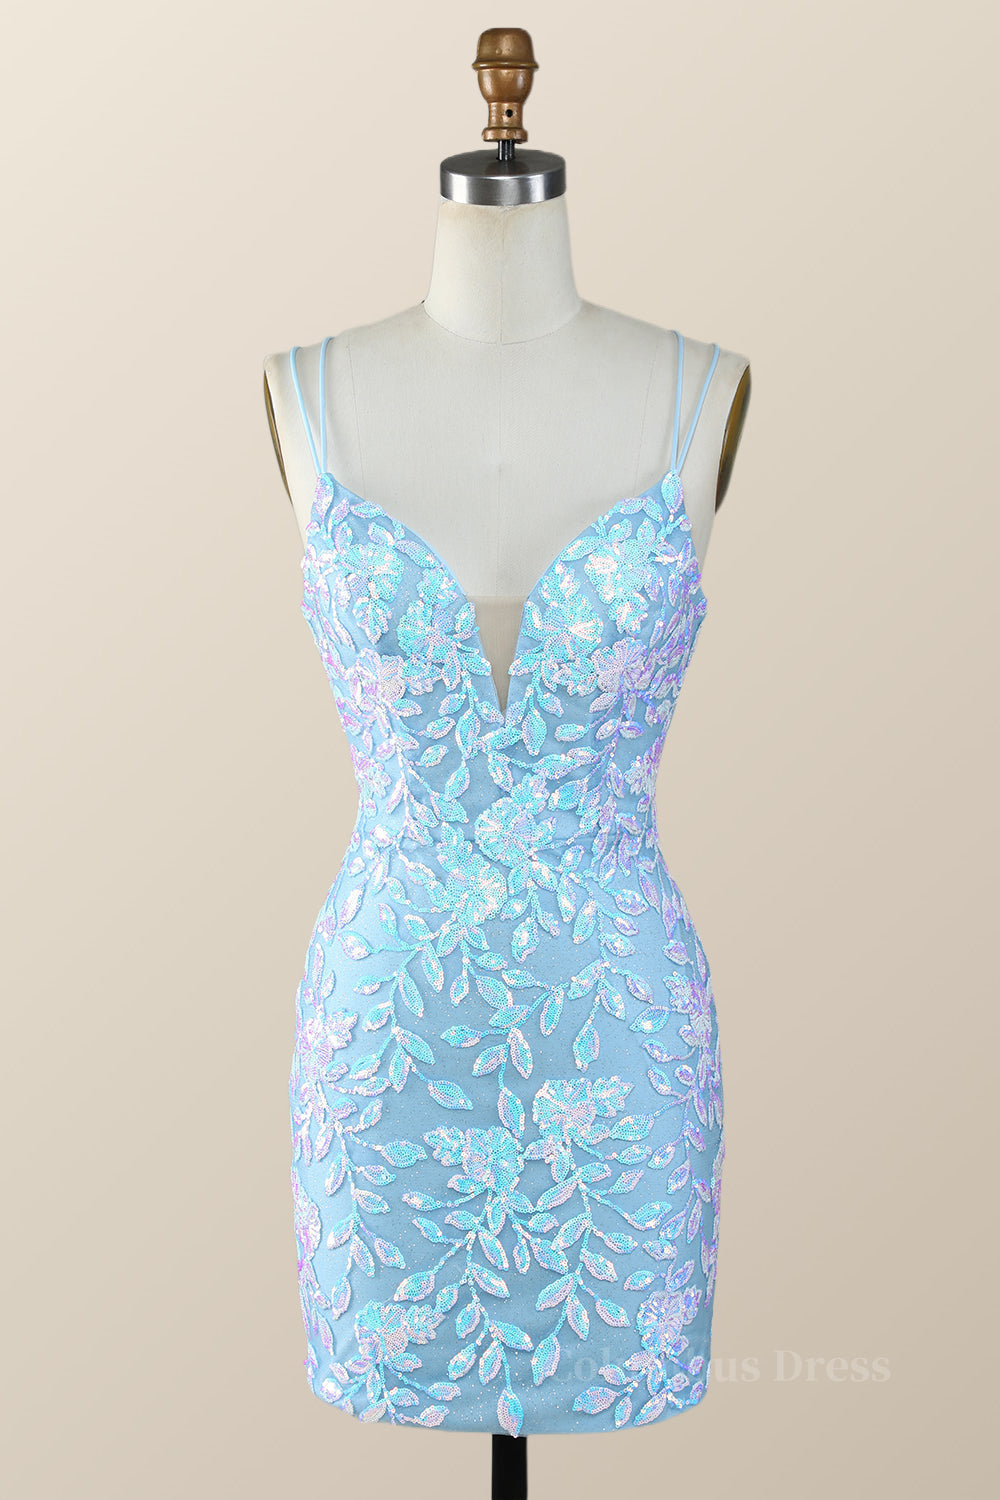 Party Dresses Ideas, Blue Sequin Bodycon Mini Dress with Straps